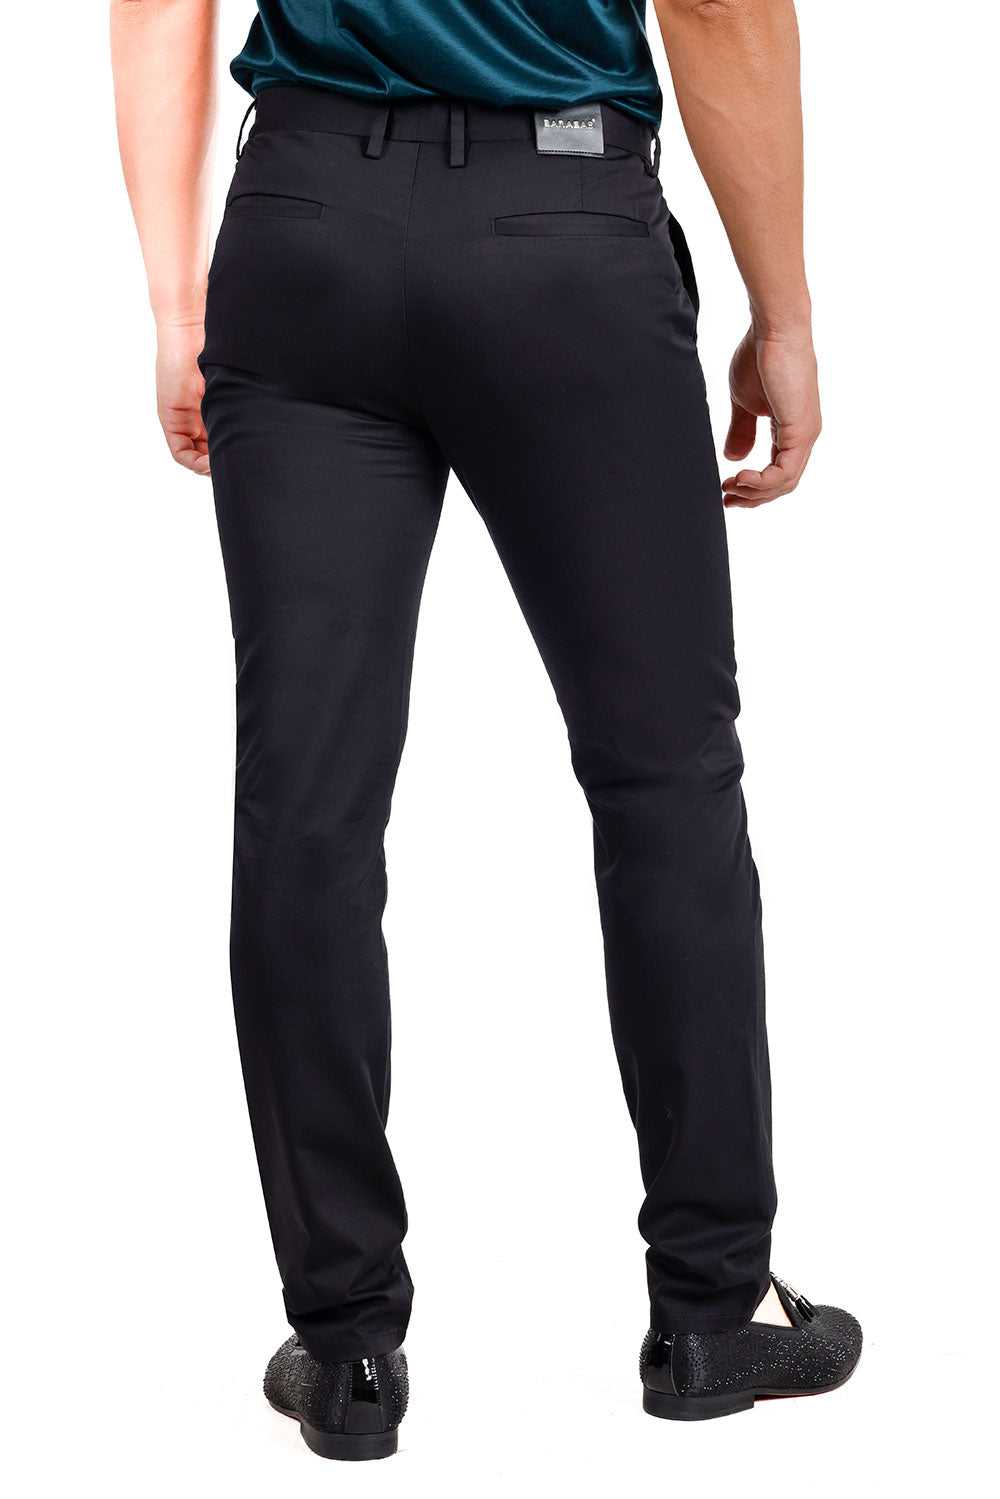 BARABAS Men's Solid Basic Color Casual Dress Pants B2062 Black